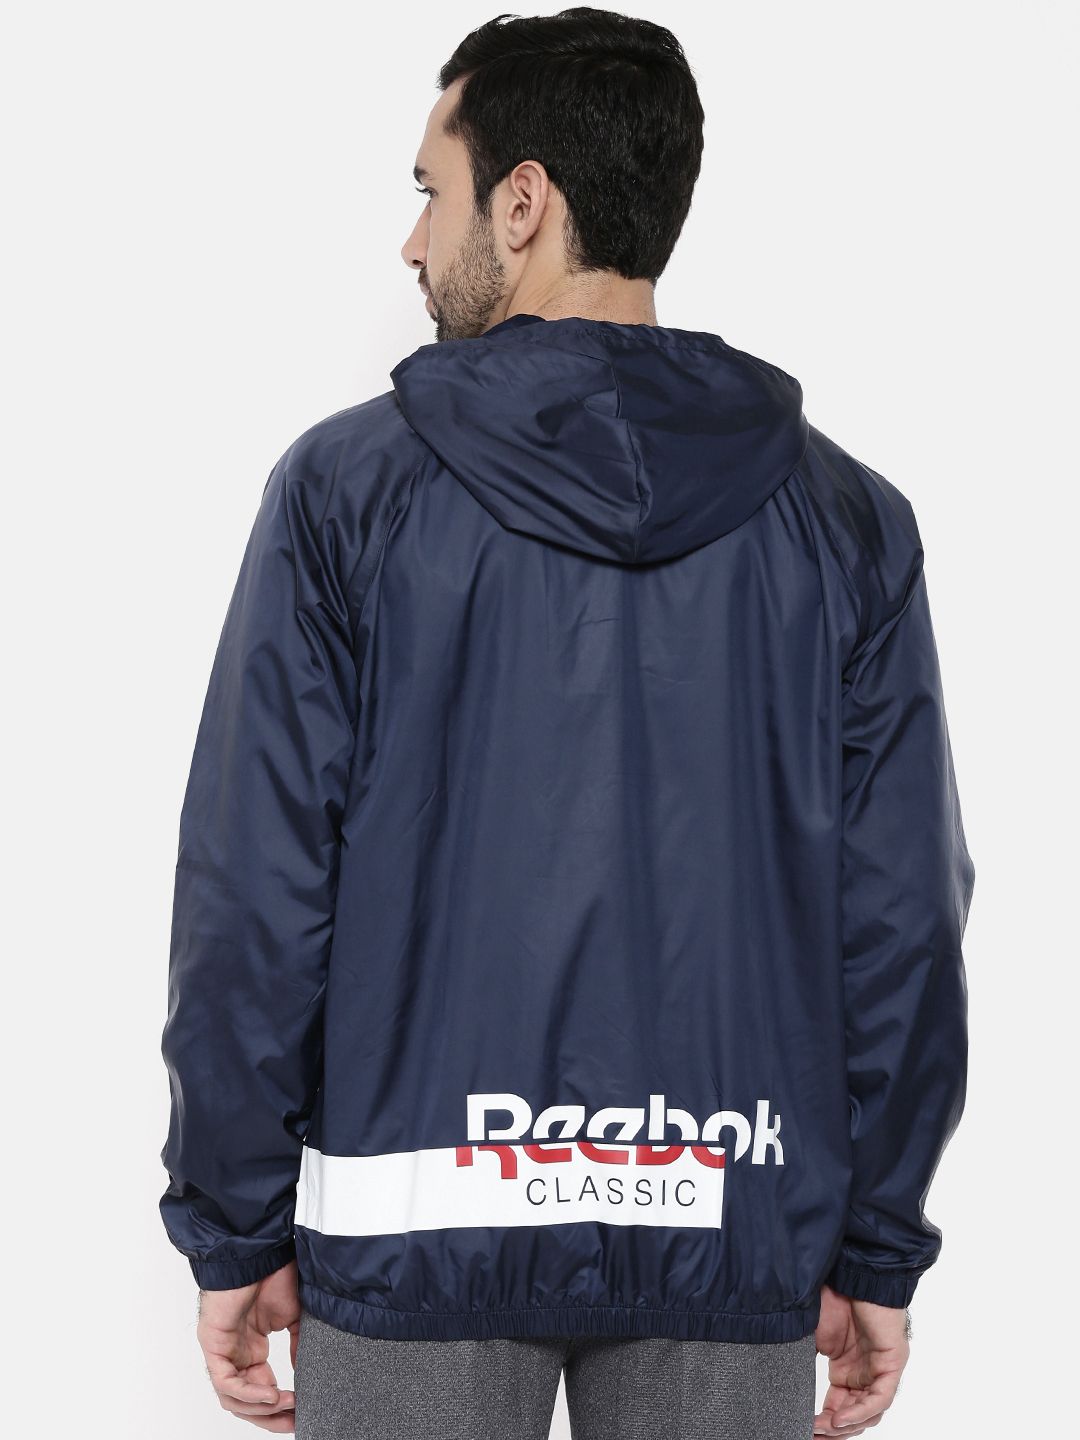 reebok classic jacket blue